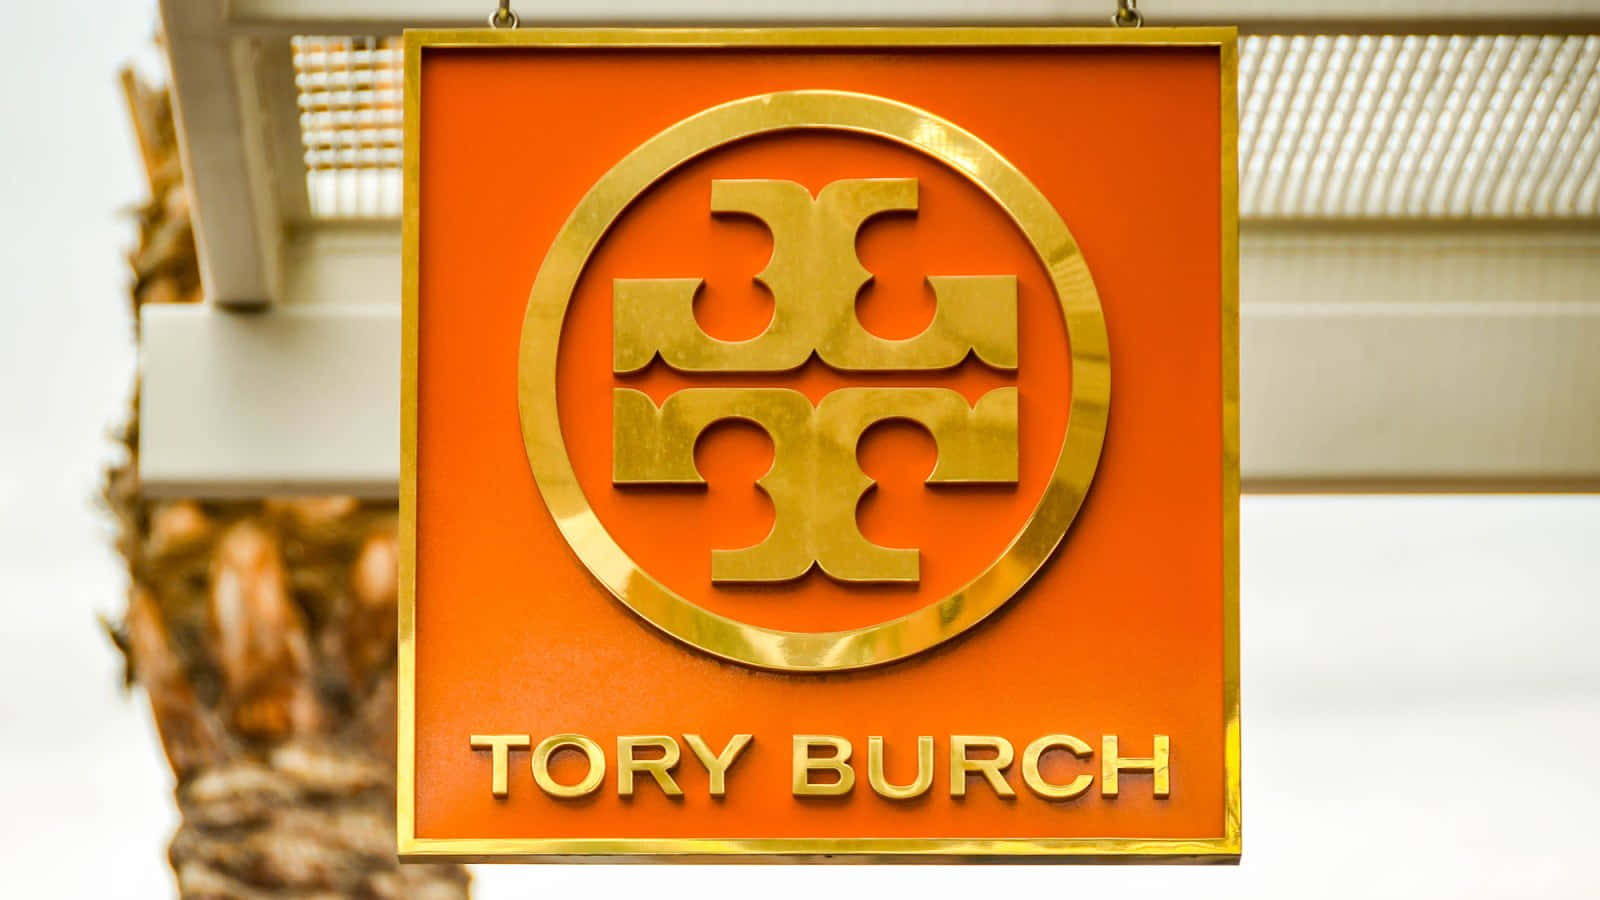 Mangfoldighedpå Sit Bedste: Mød Tory Burch!